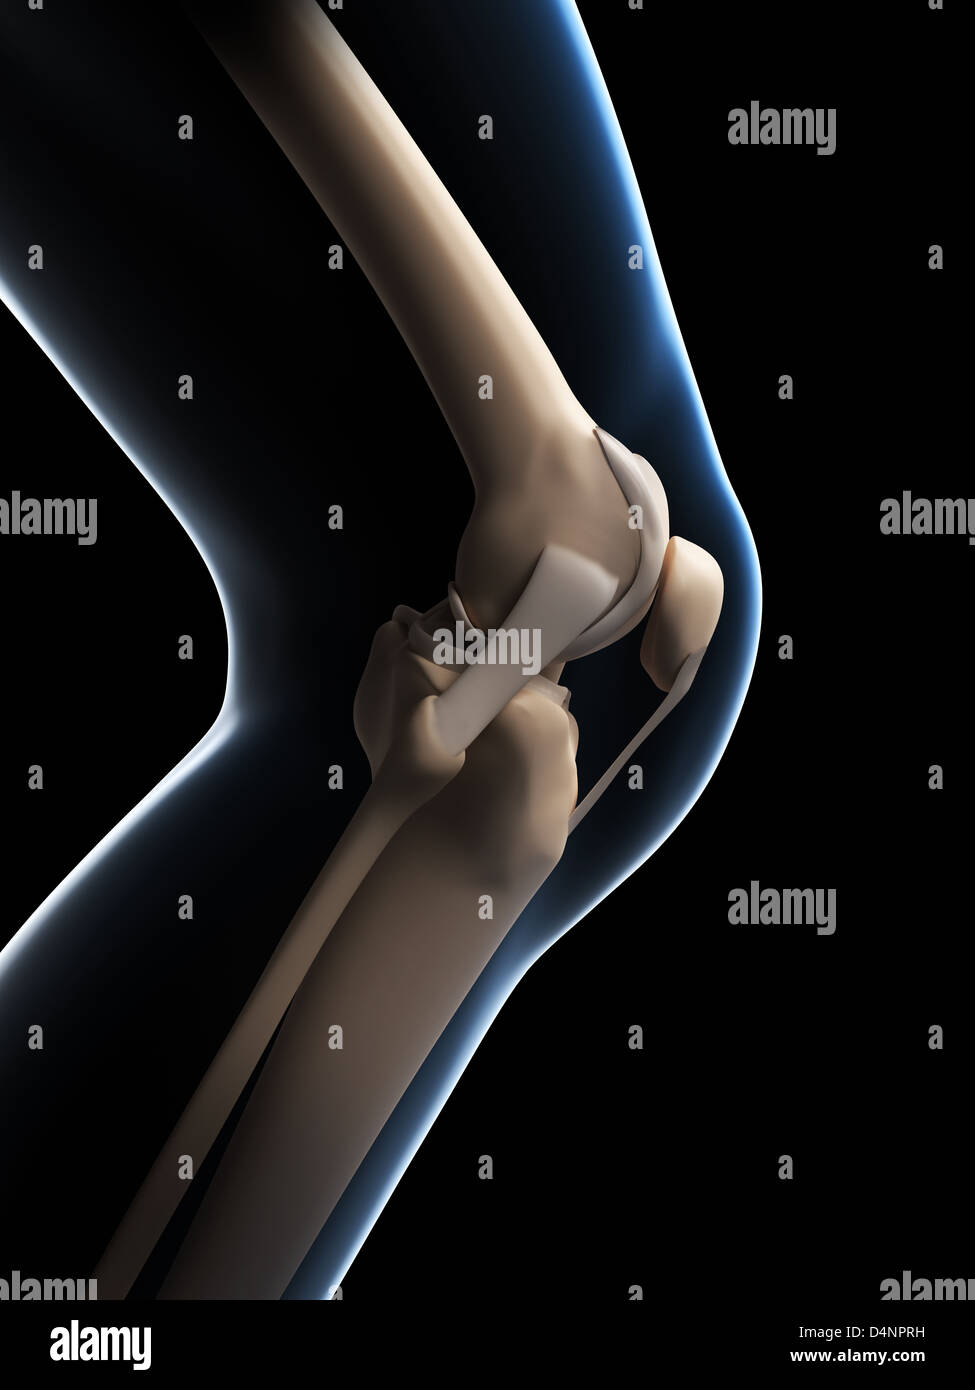 Anatomy of the knee Stock Photo